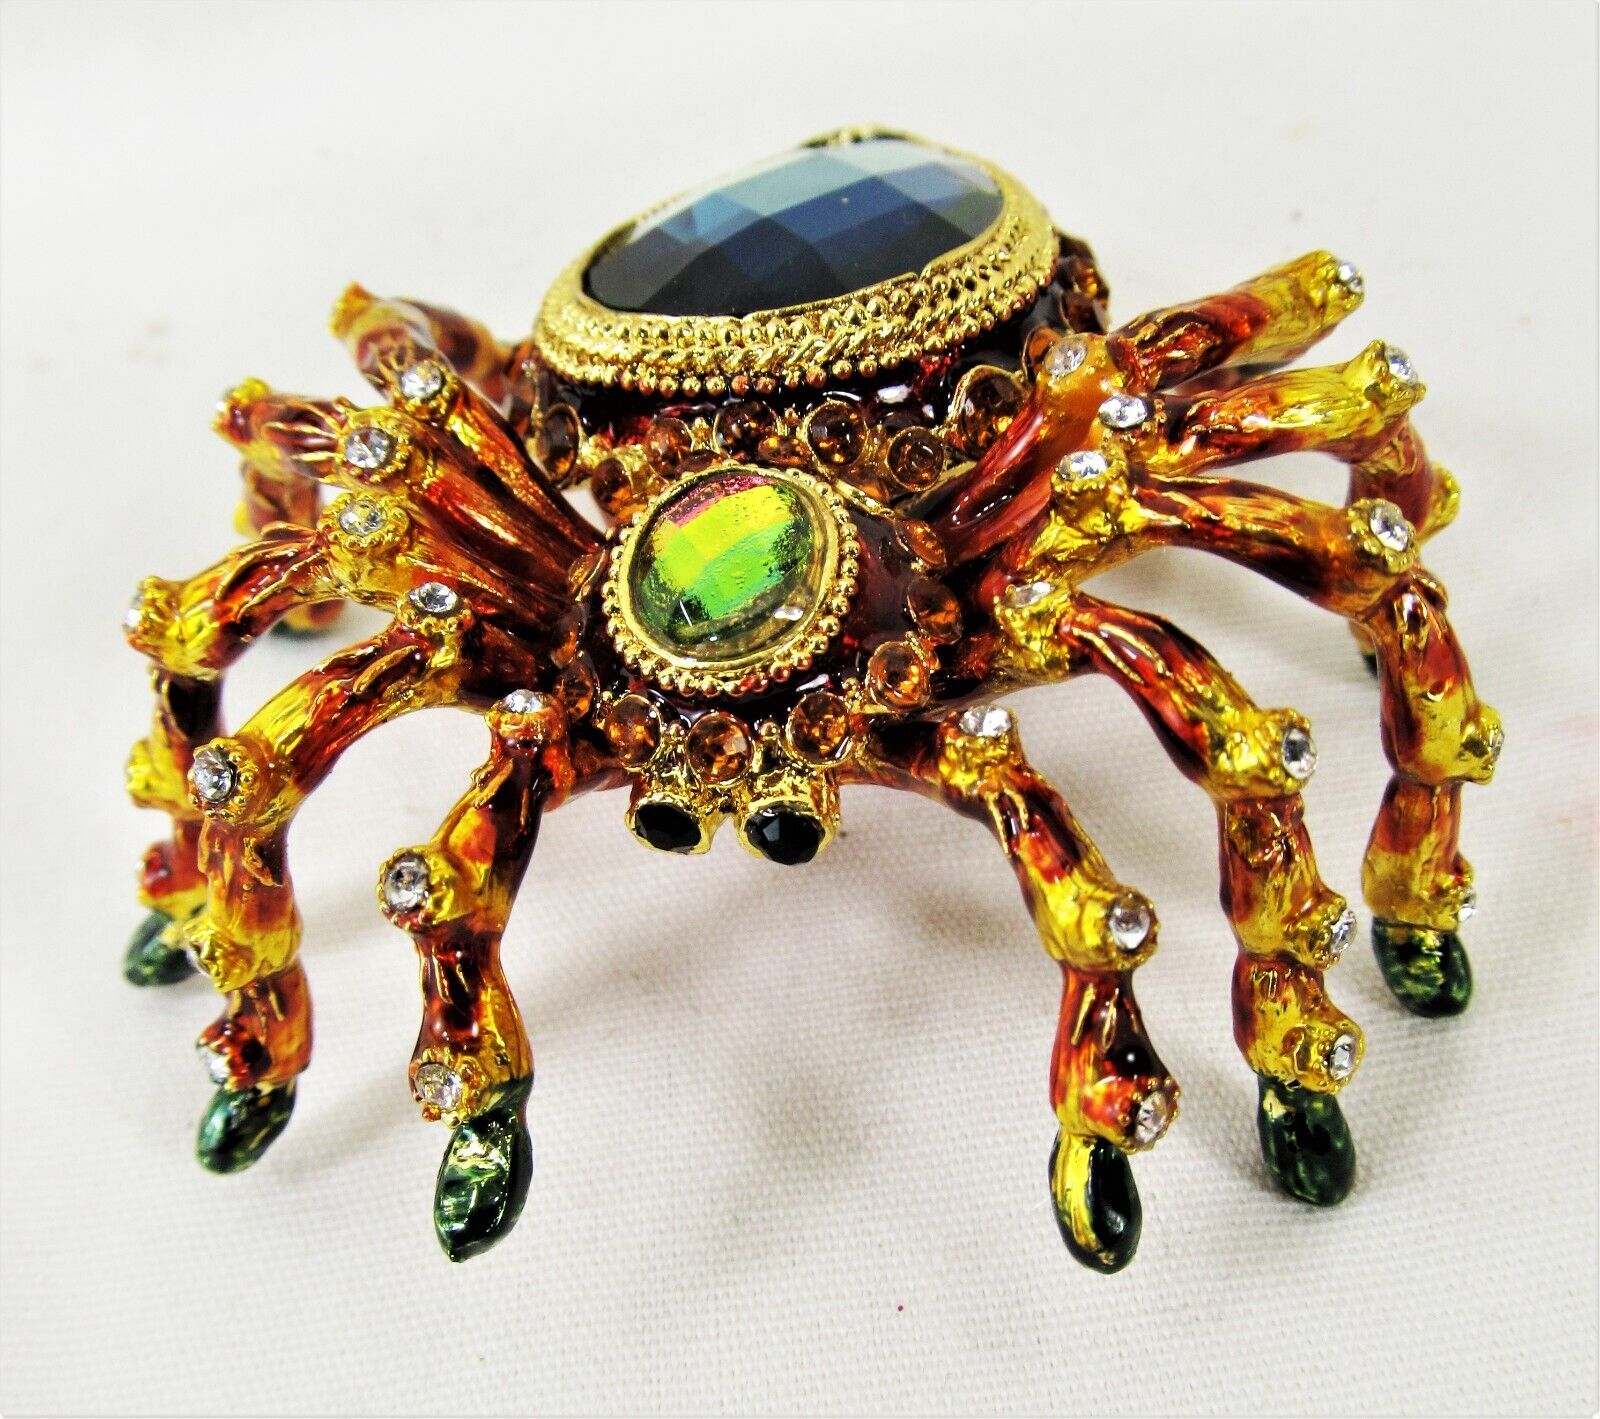 Spider Jeweled Pewter Trinket Box Без бренда - фотография #4